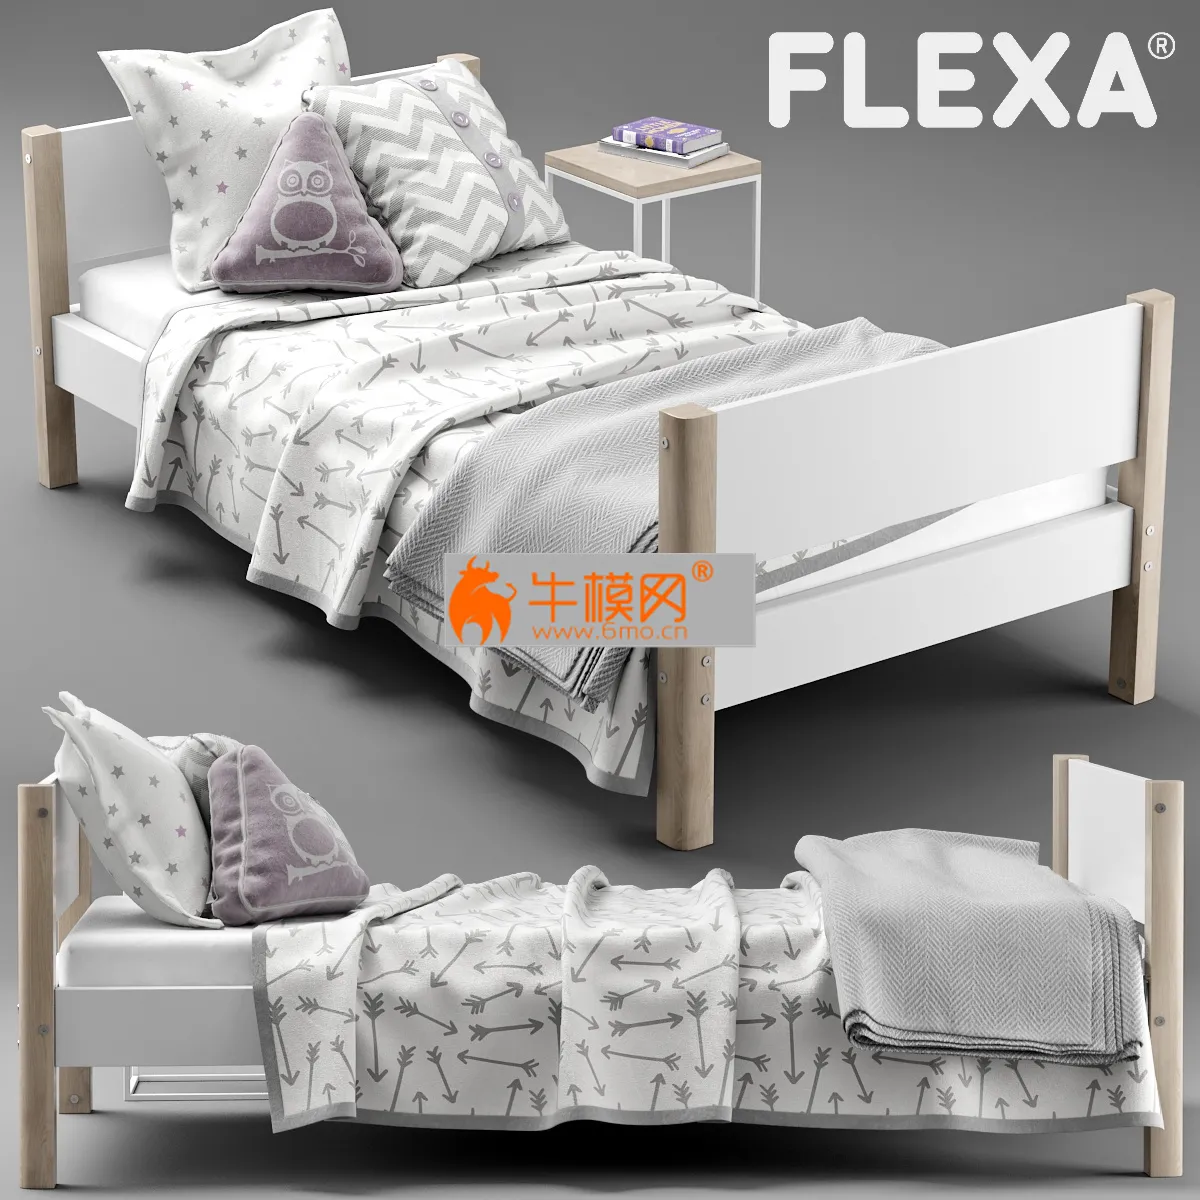 FLEXA SINGLE BED – 3726